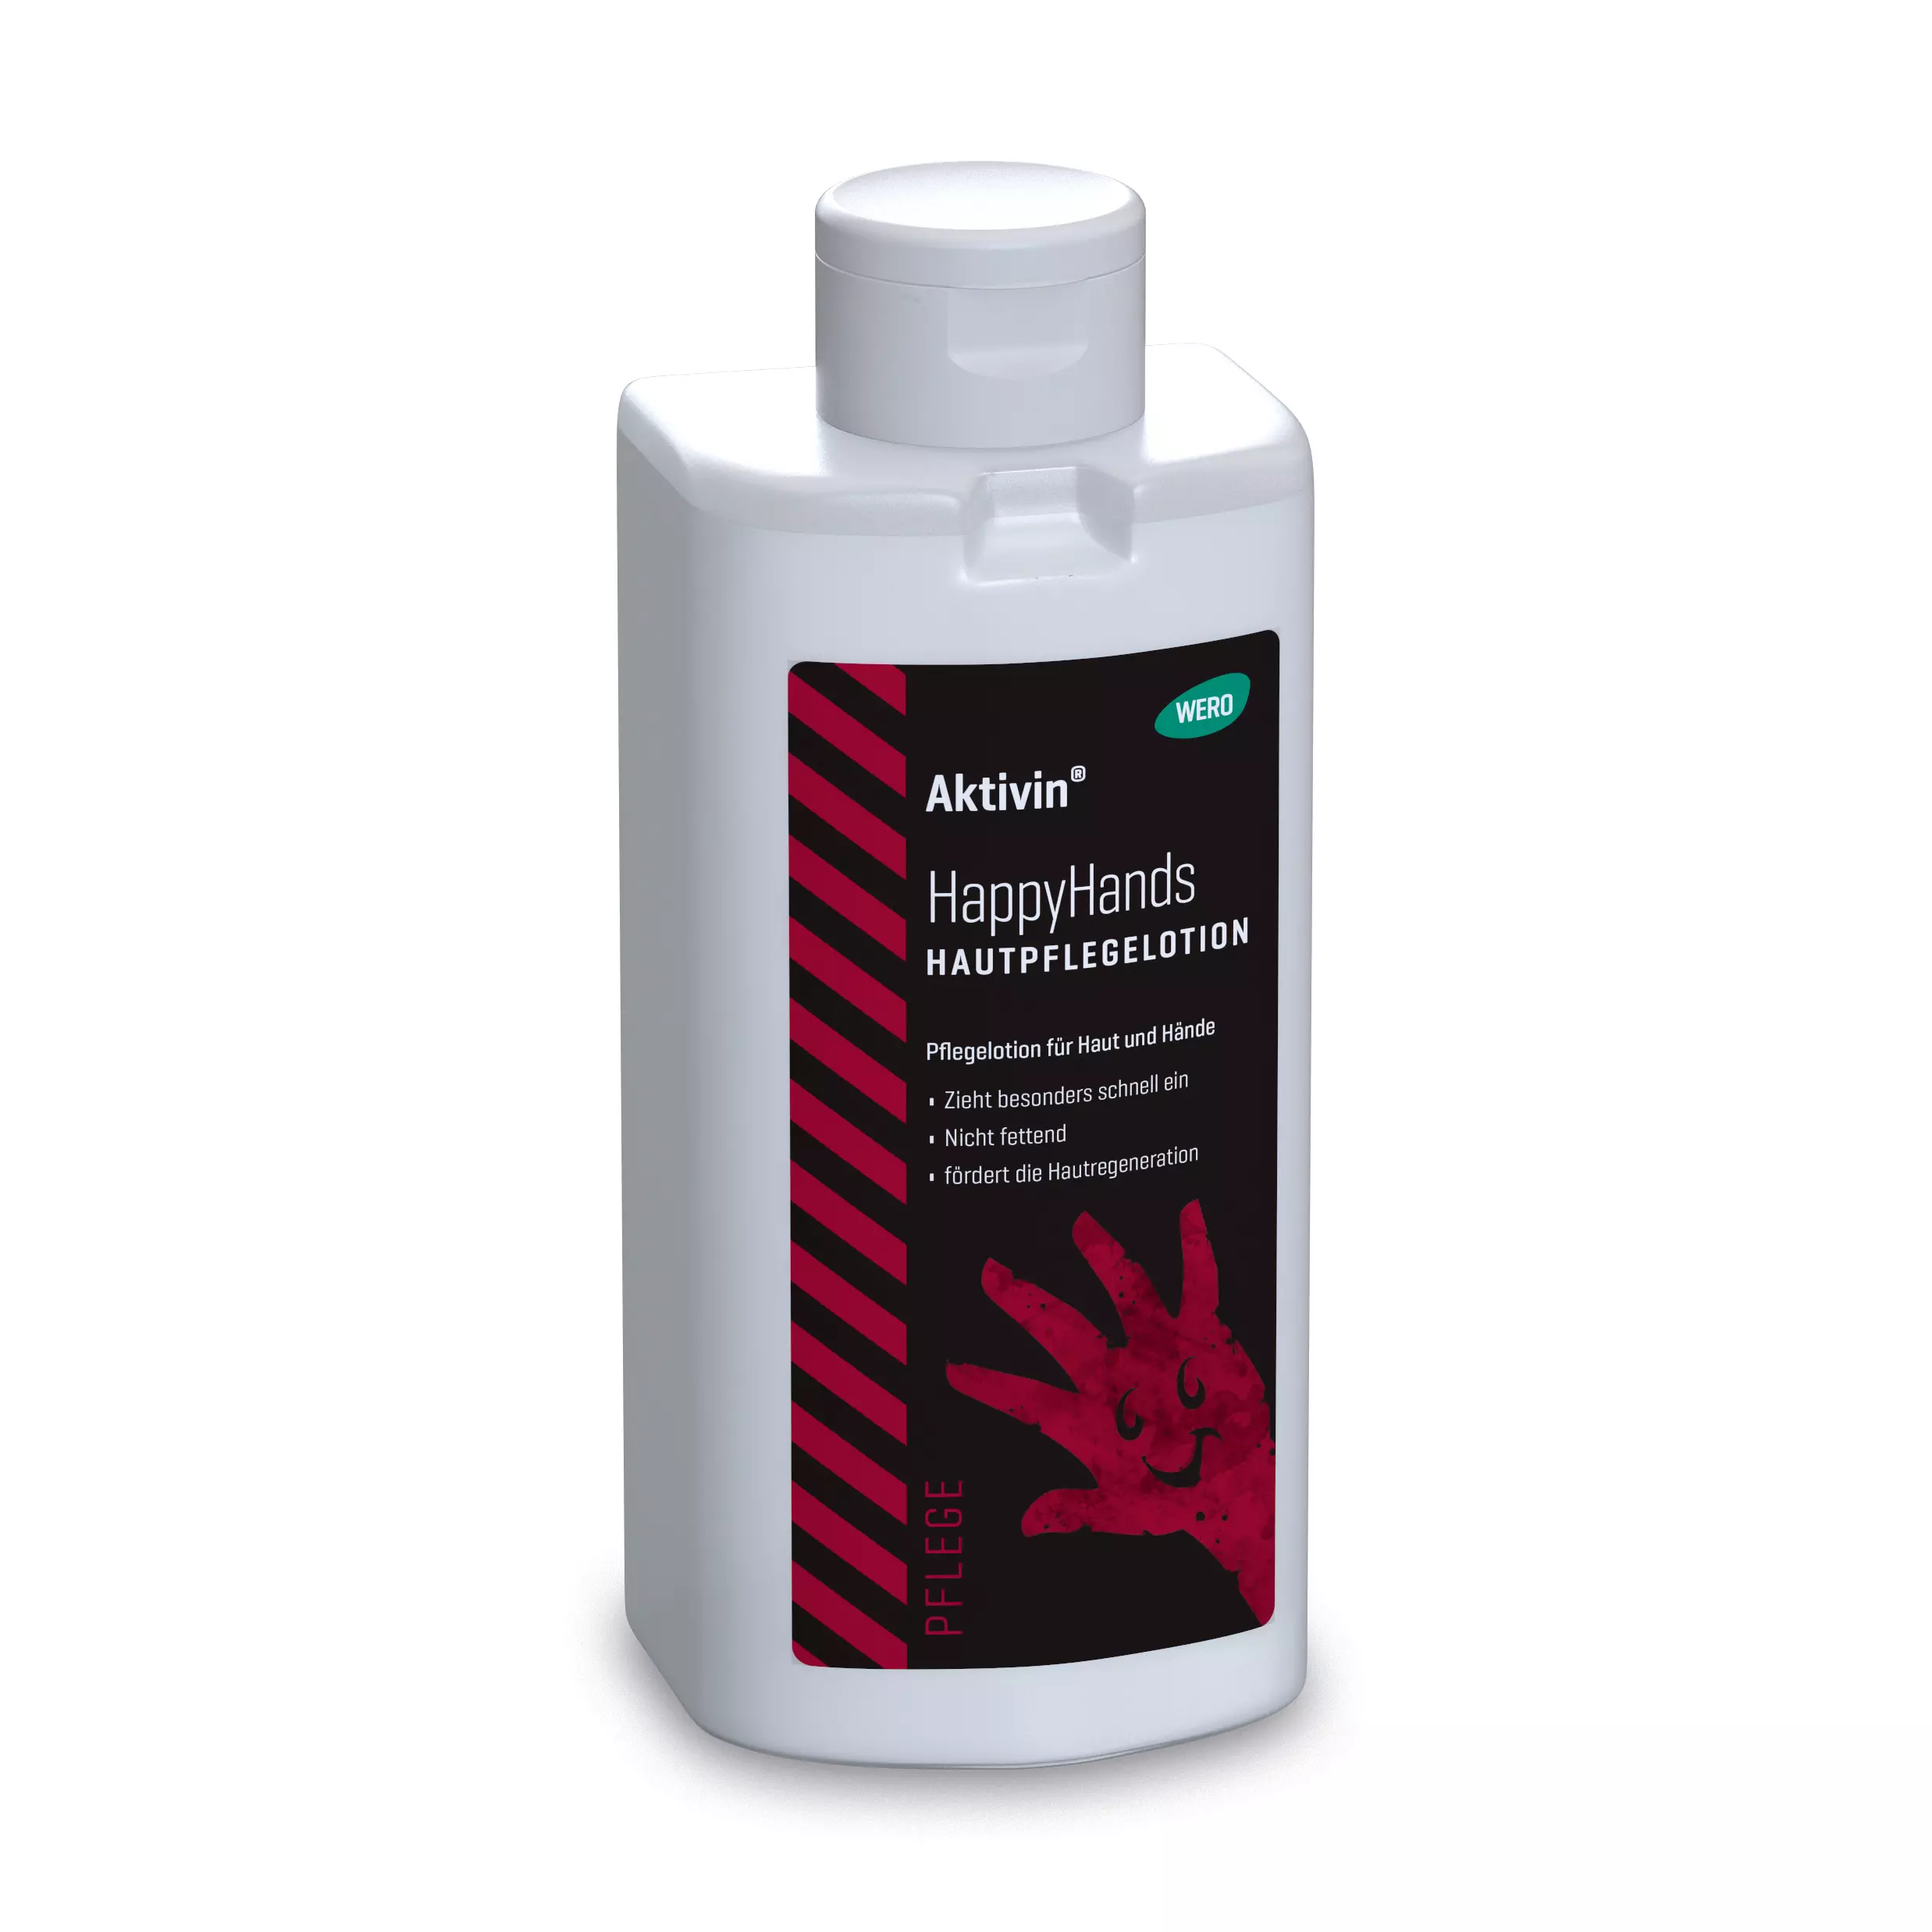 Hautpflegelotion Aktivin® HappyHands - 500 ml